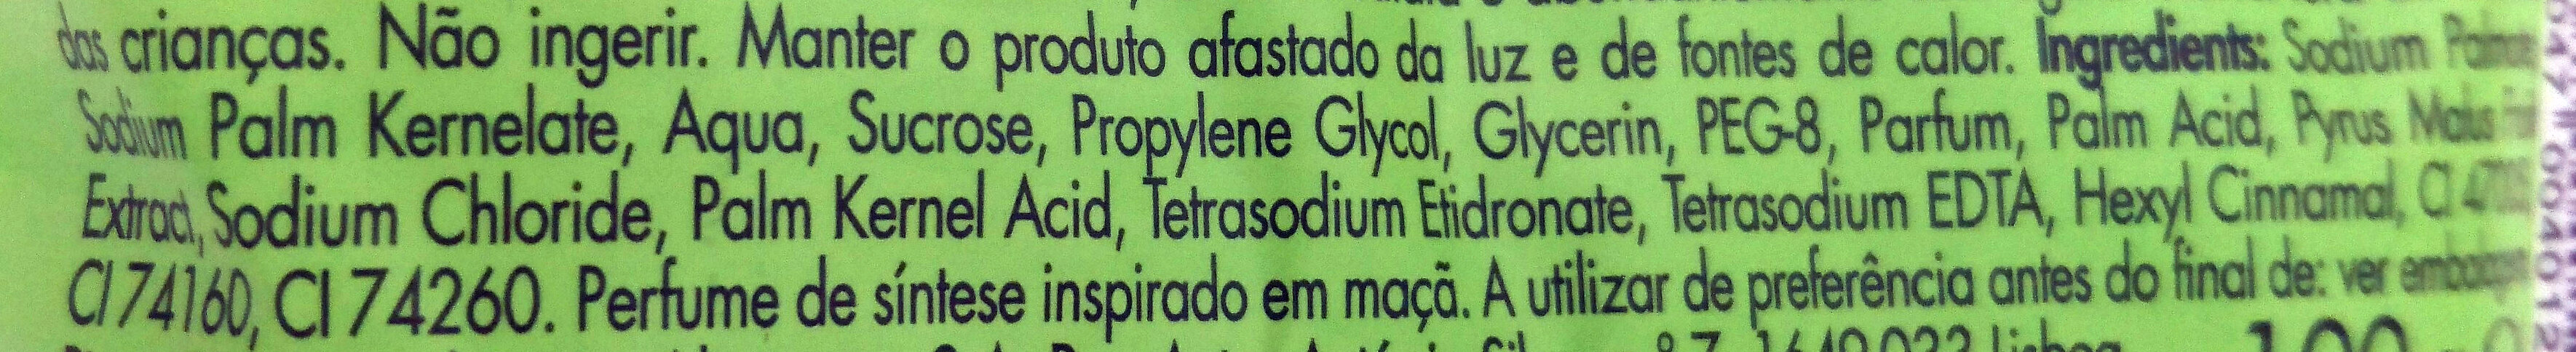 Sabonete glicerina maçã - Ingrédients - pt